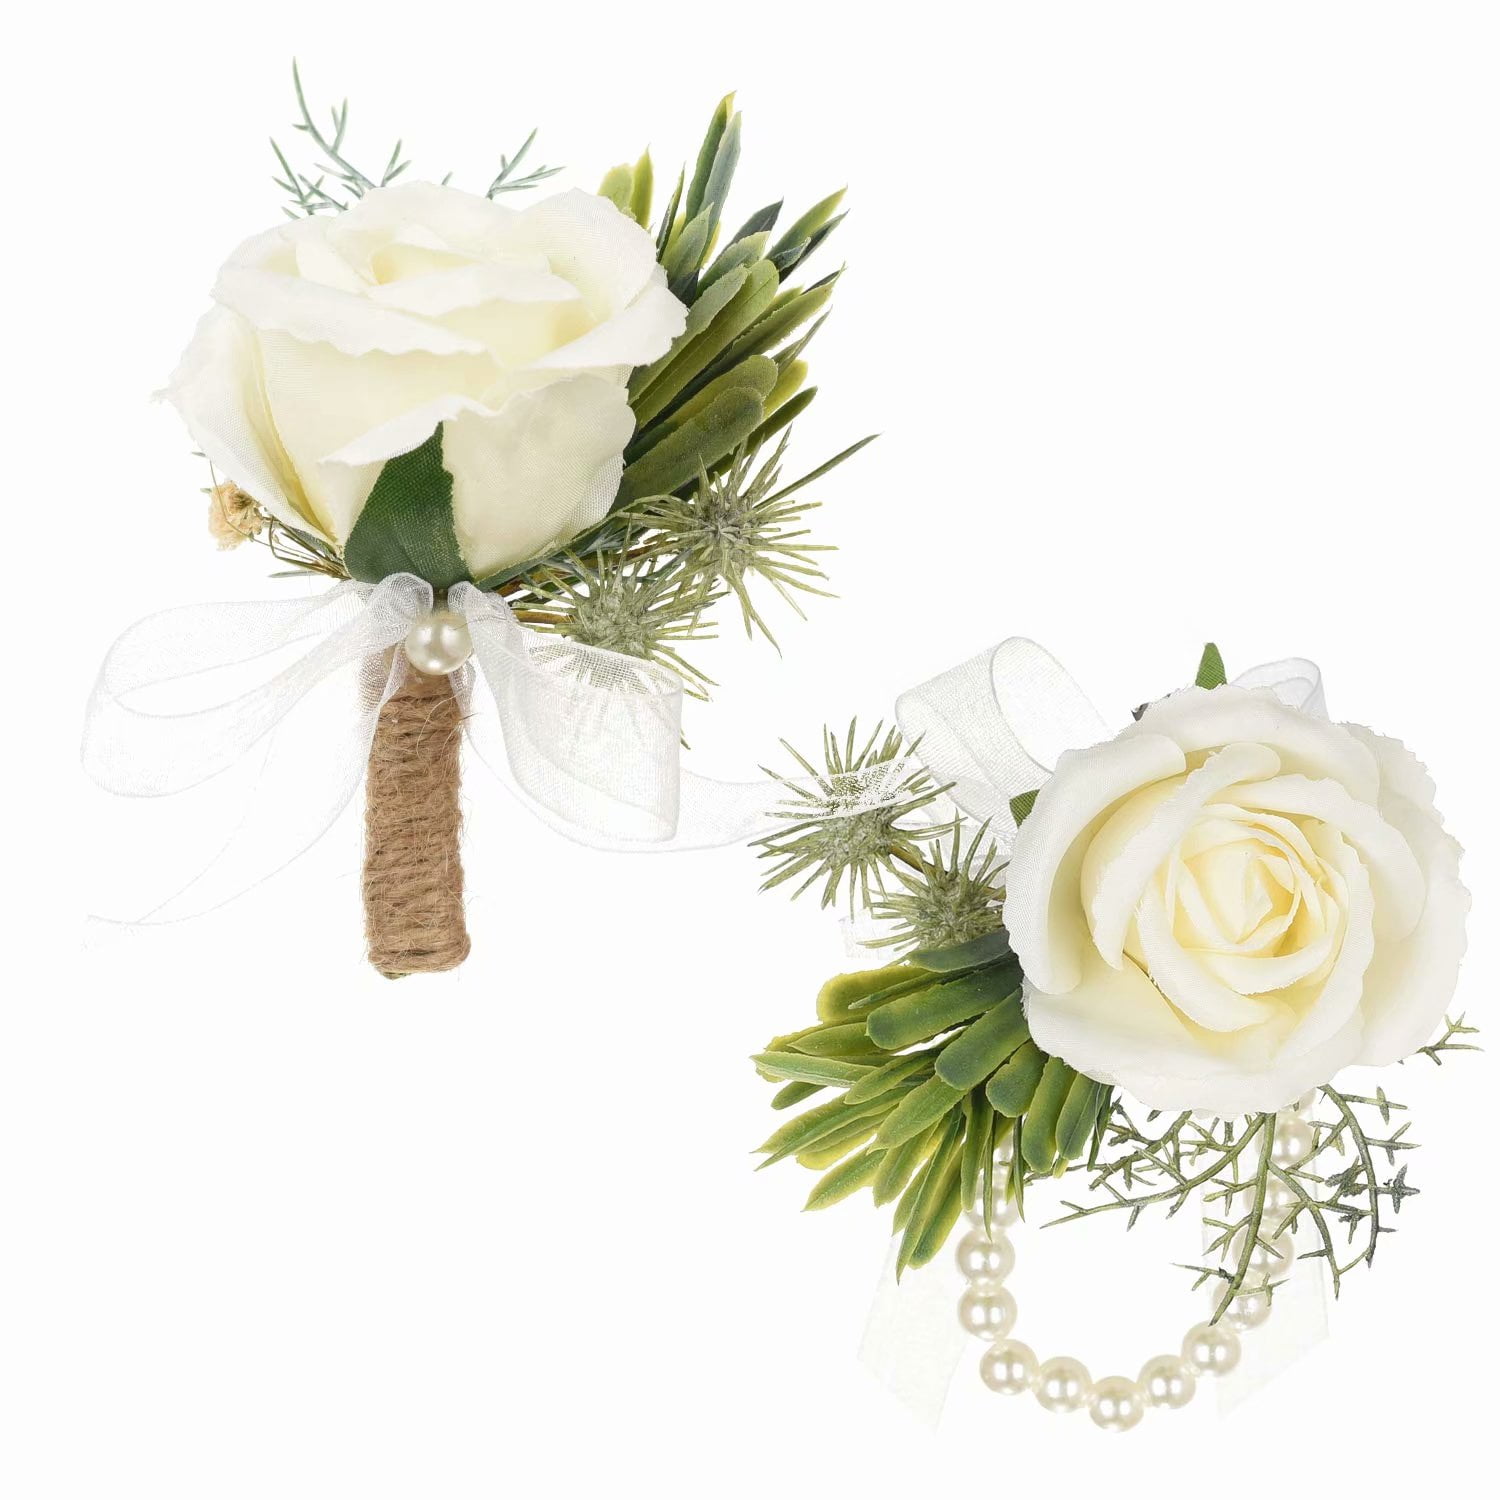 Corsage Wrist Flower Calla lily Boutonniere Wedding Party Celebrat Accessories